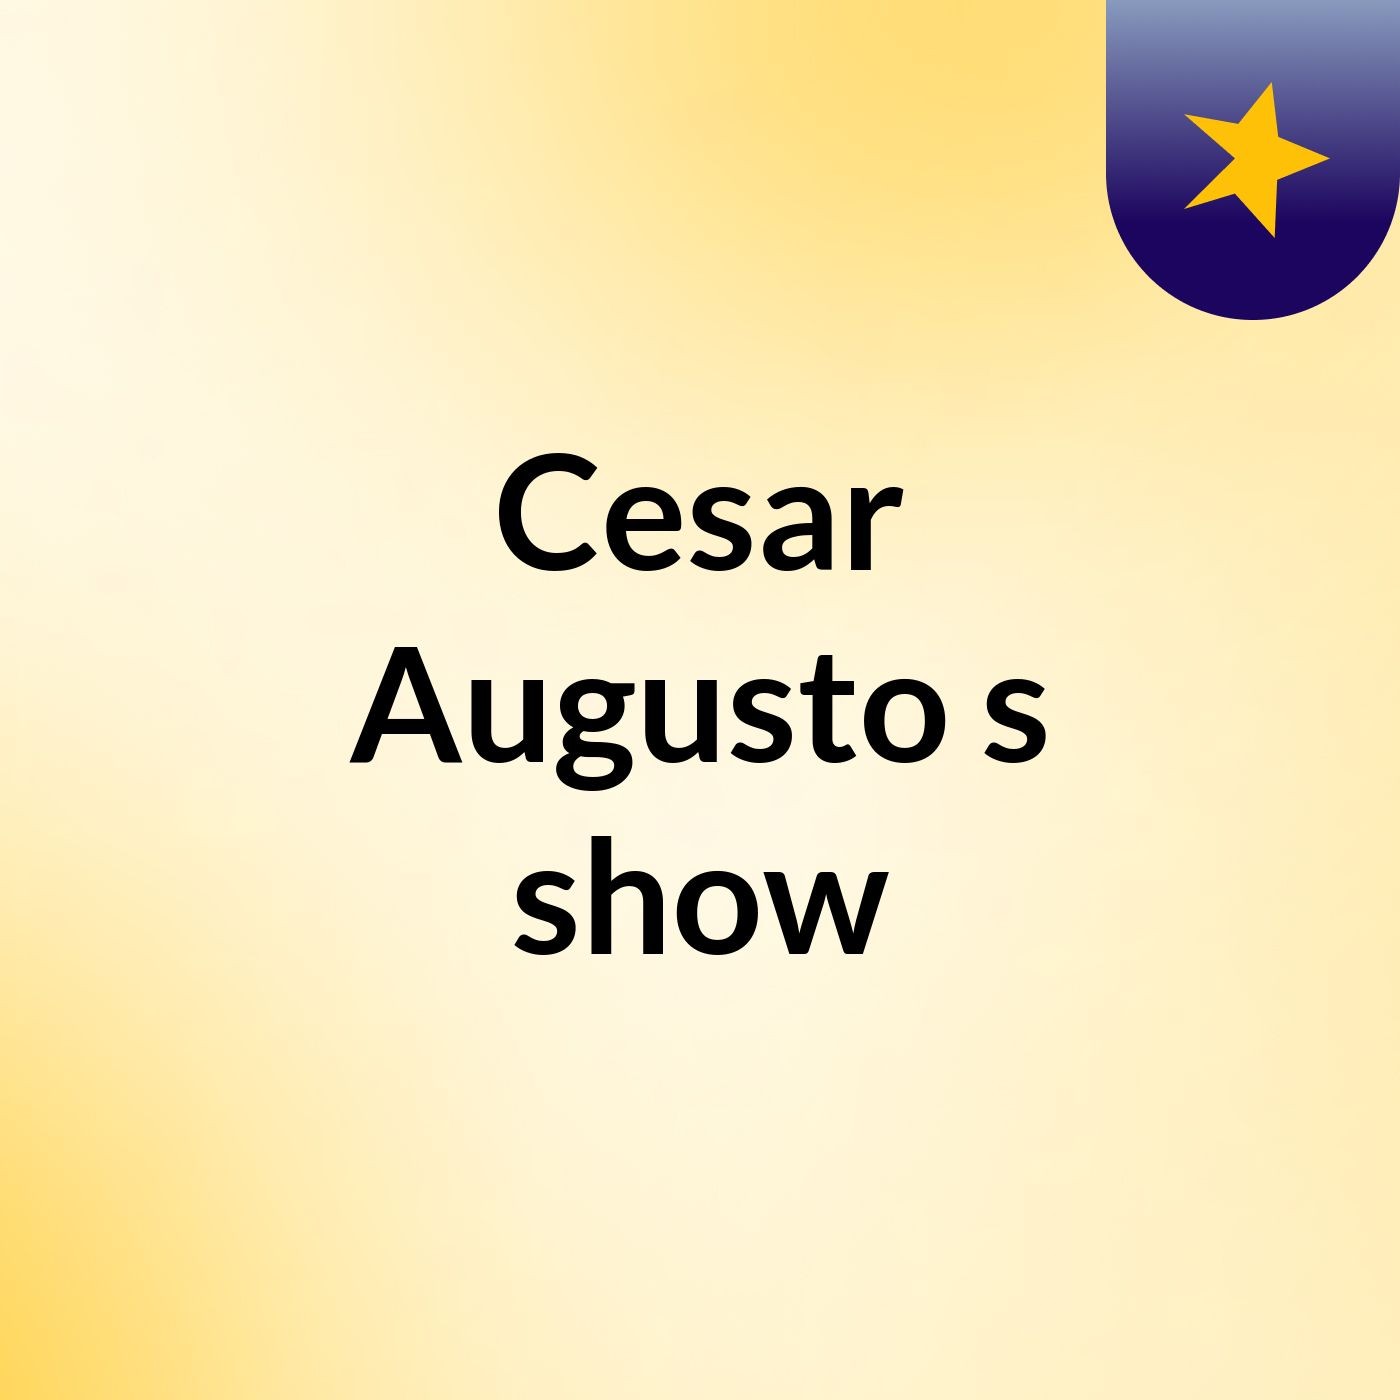 Cesar Augusto's show